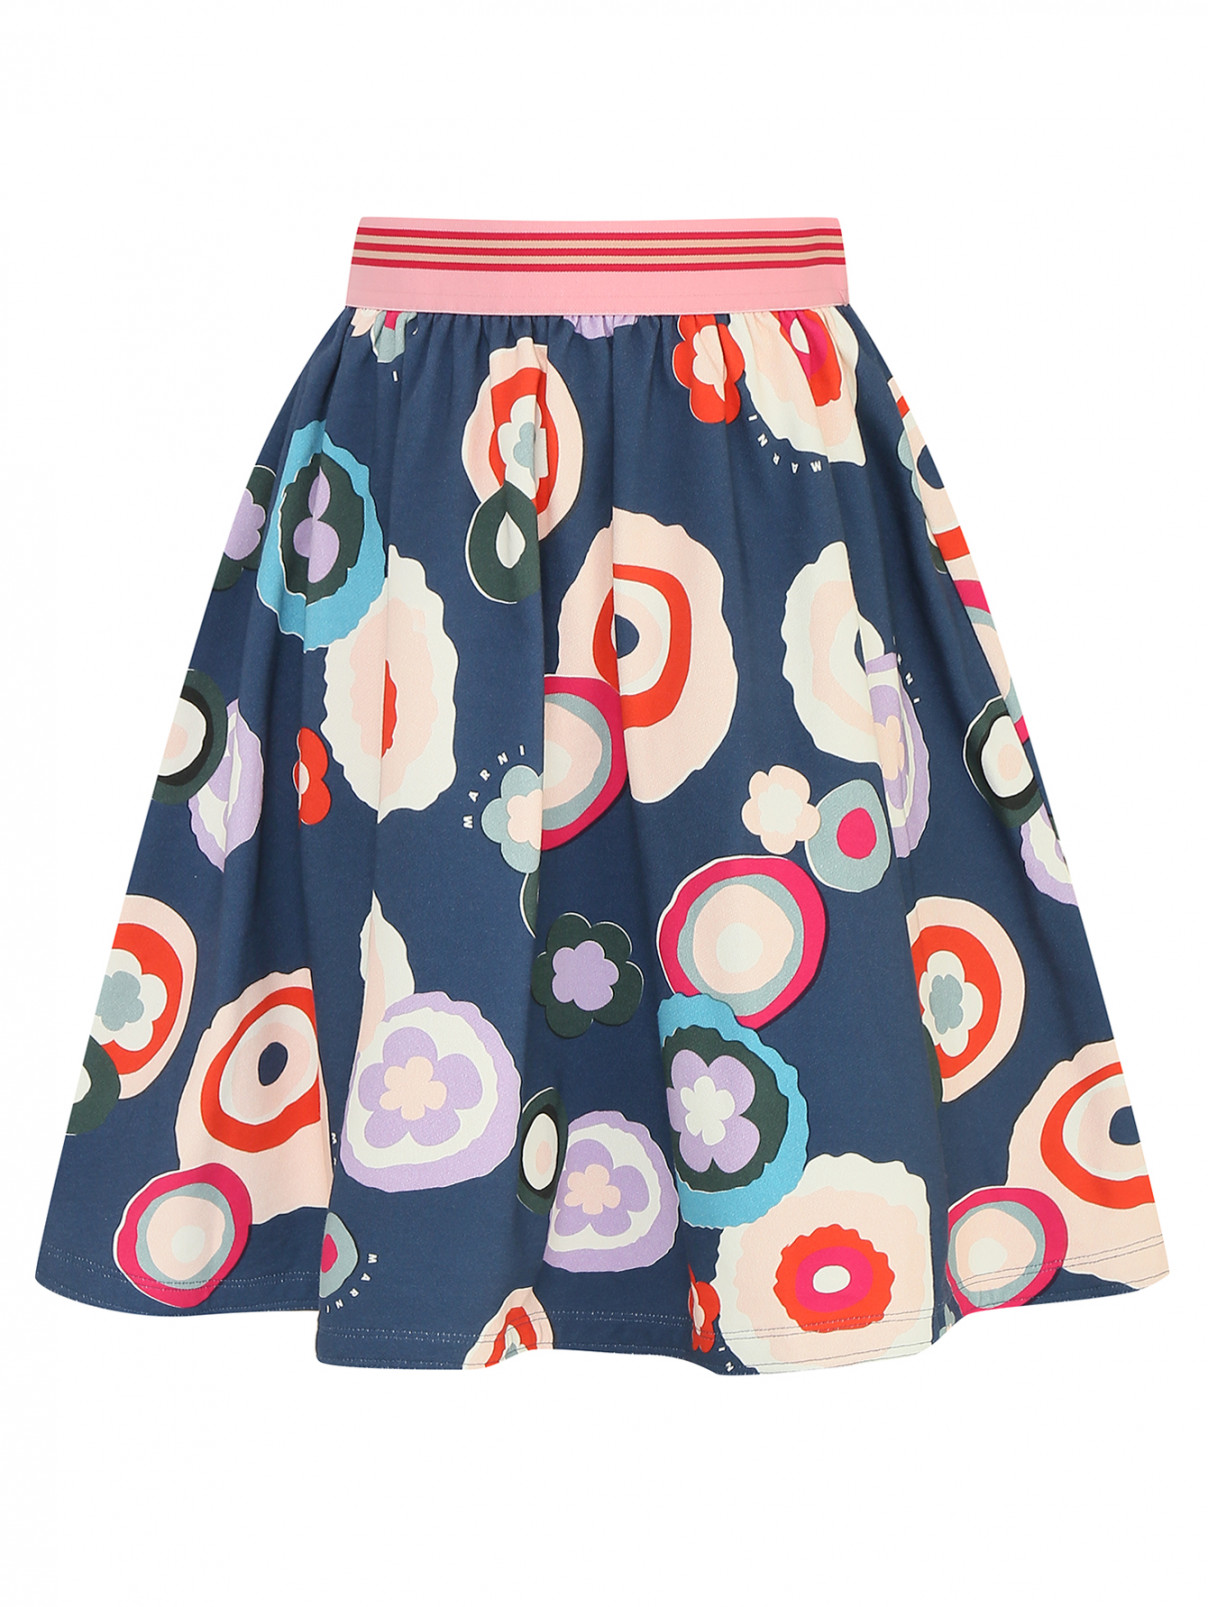 Трикотажная юбка с узором Marni  –  Общий вид  – Цвет:  Узор